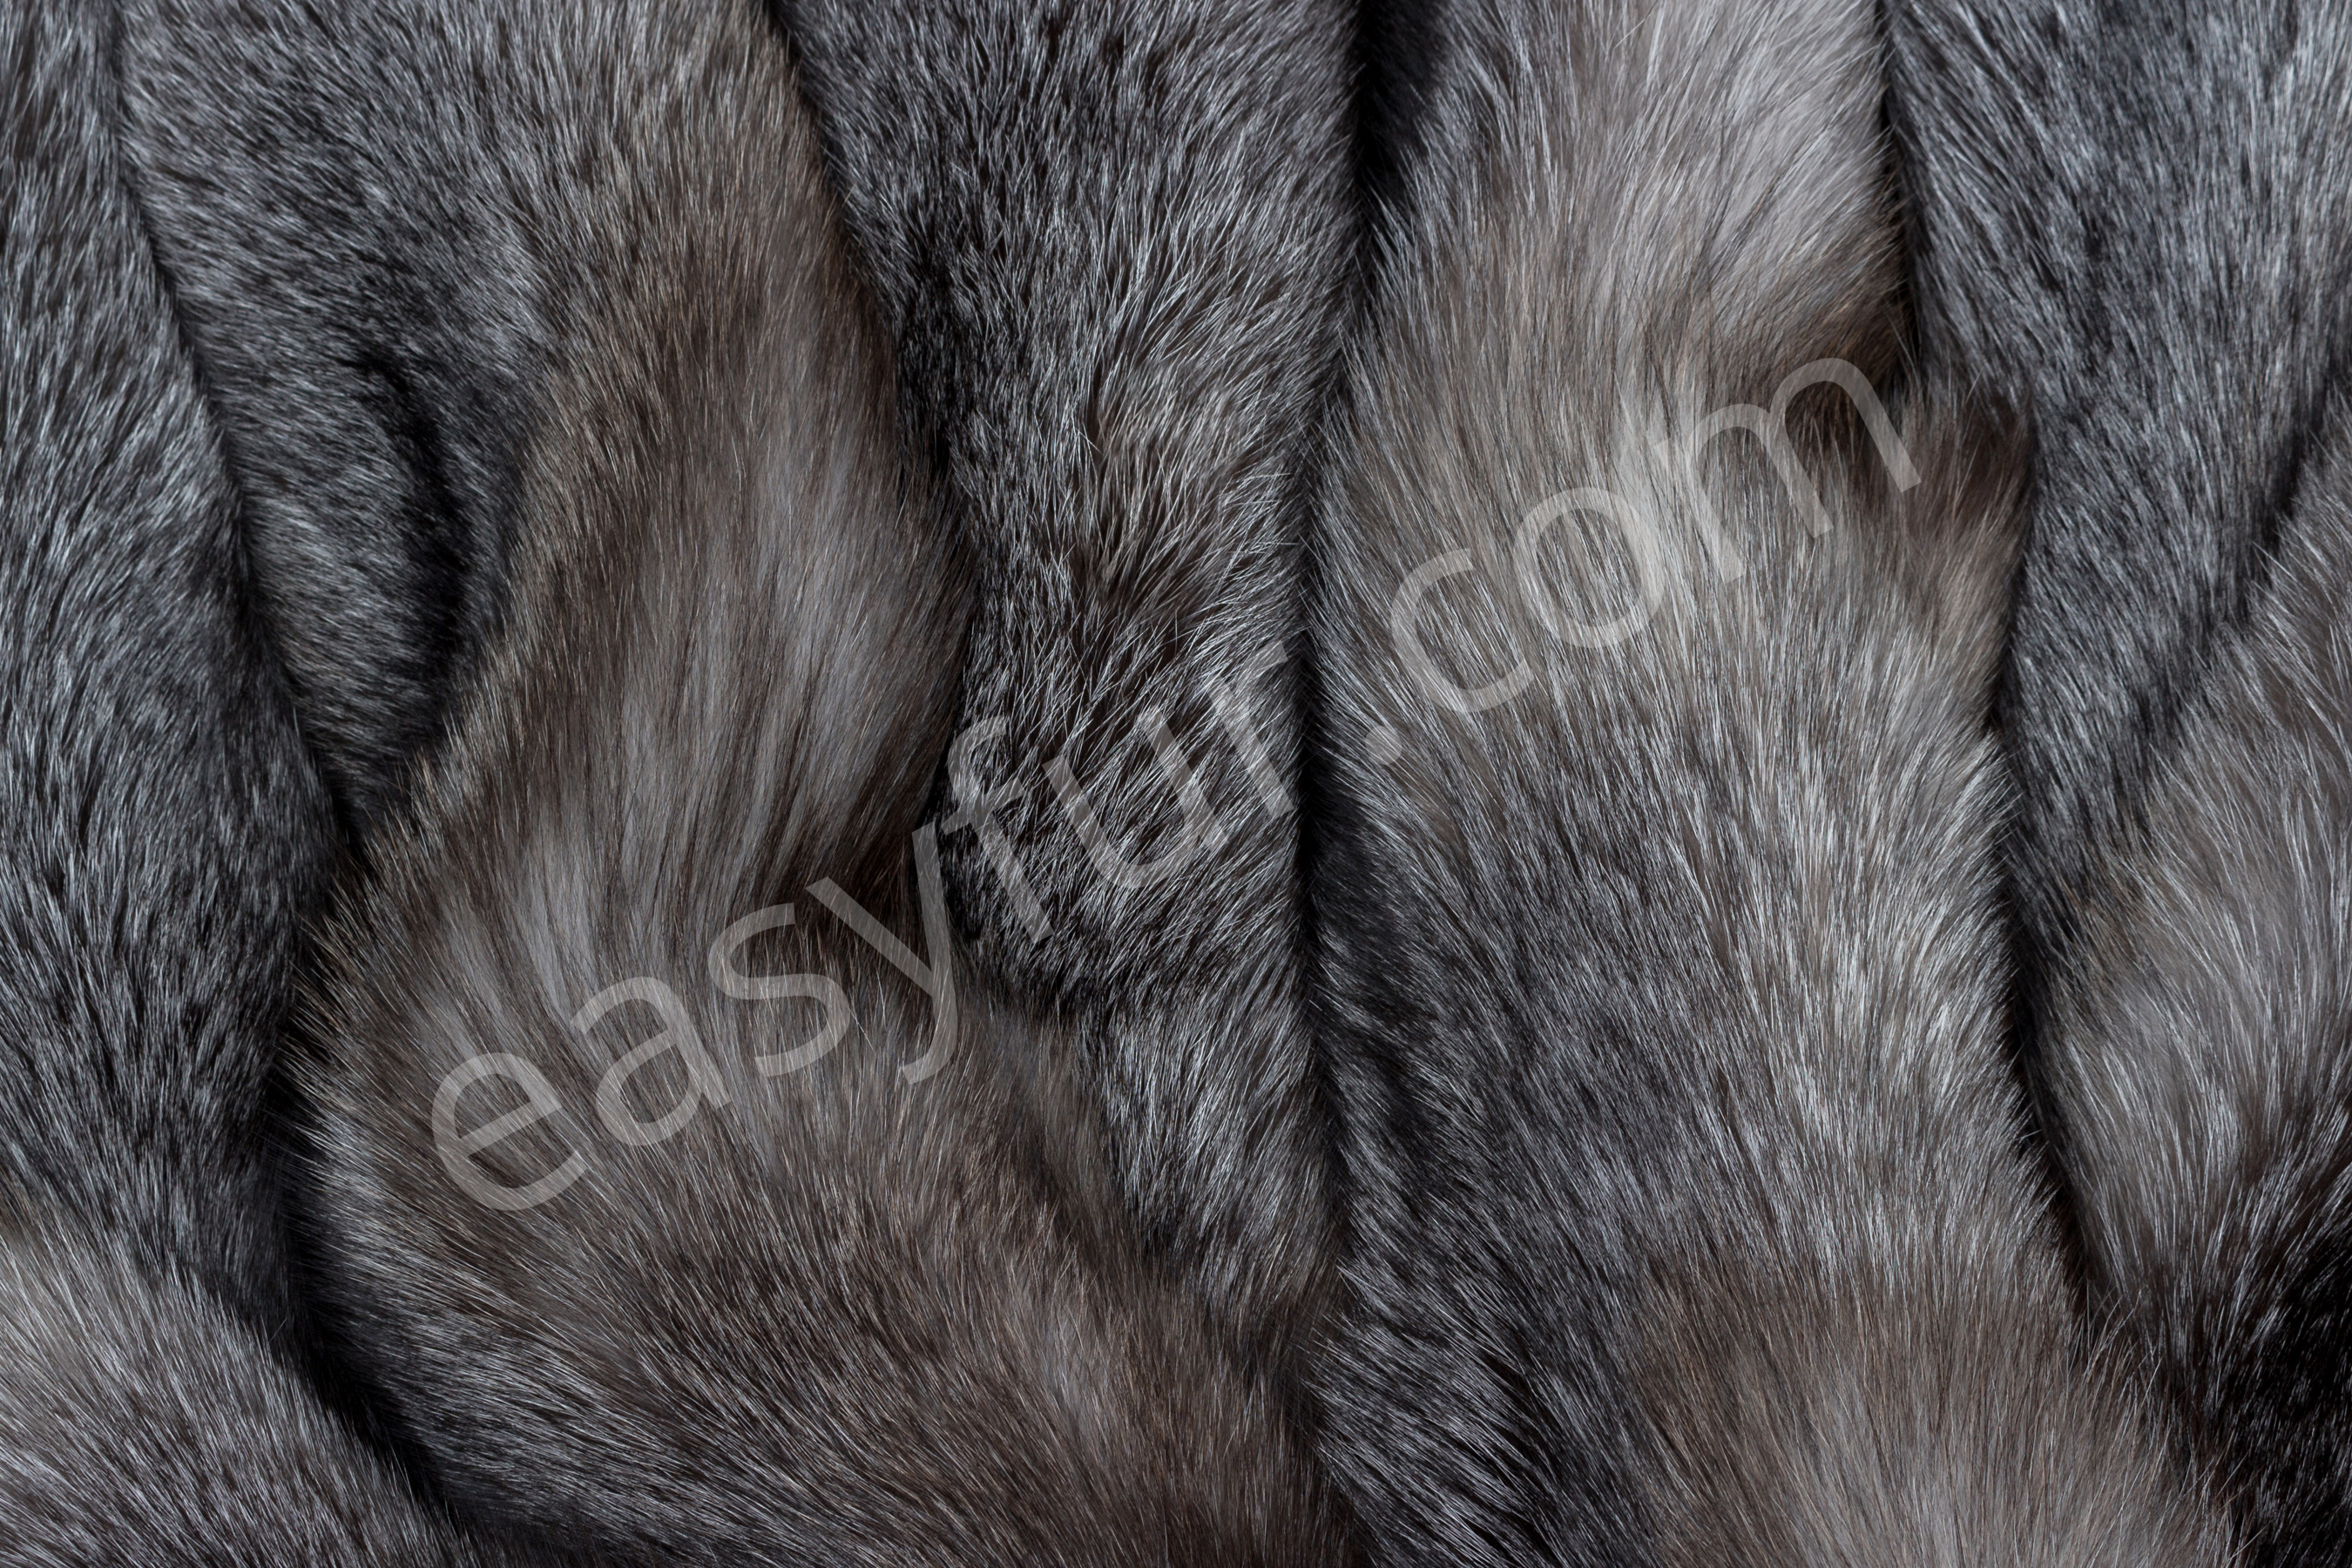 SAGA Blue Frost Fuchs Felle (SAGA Fur)